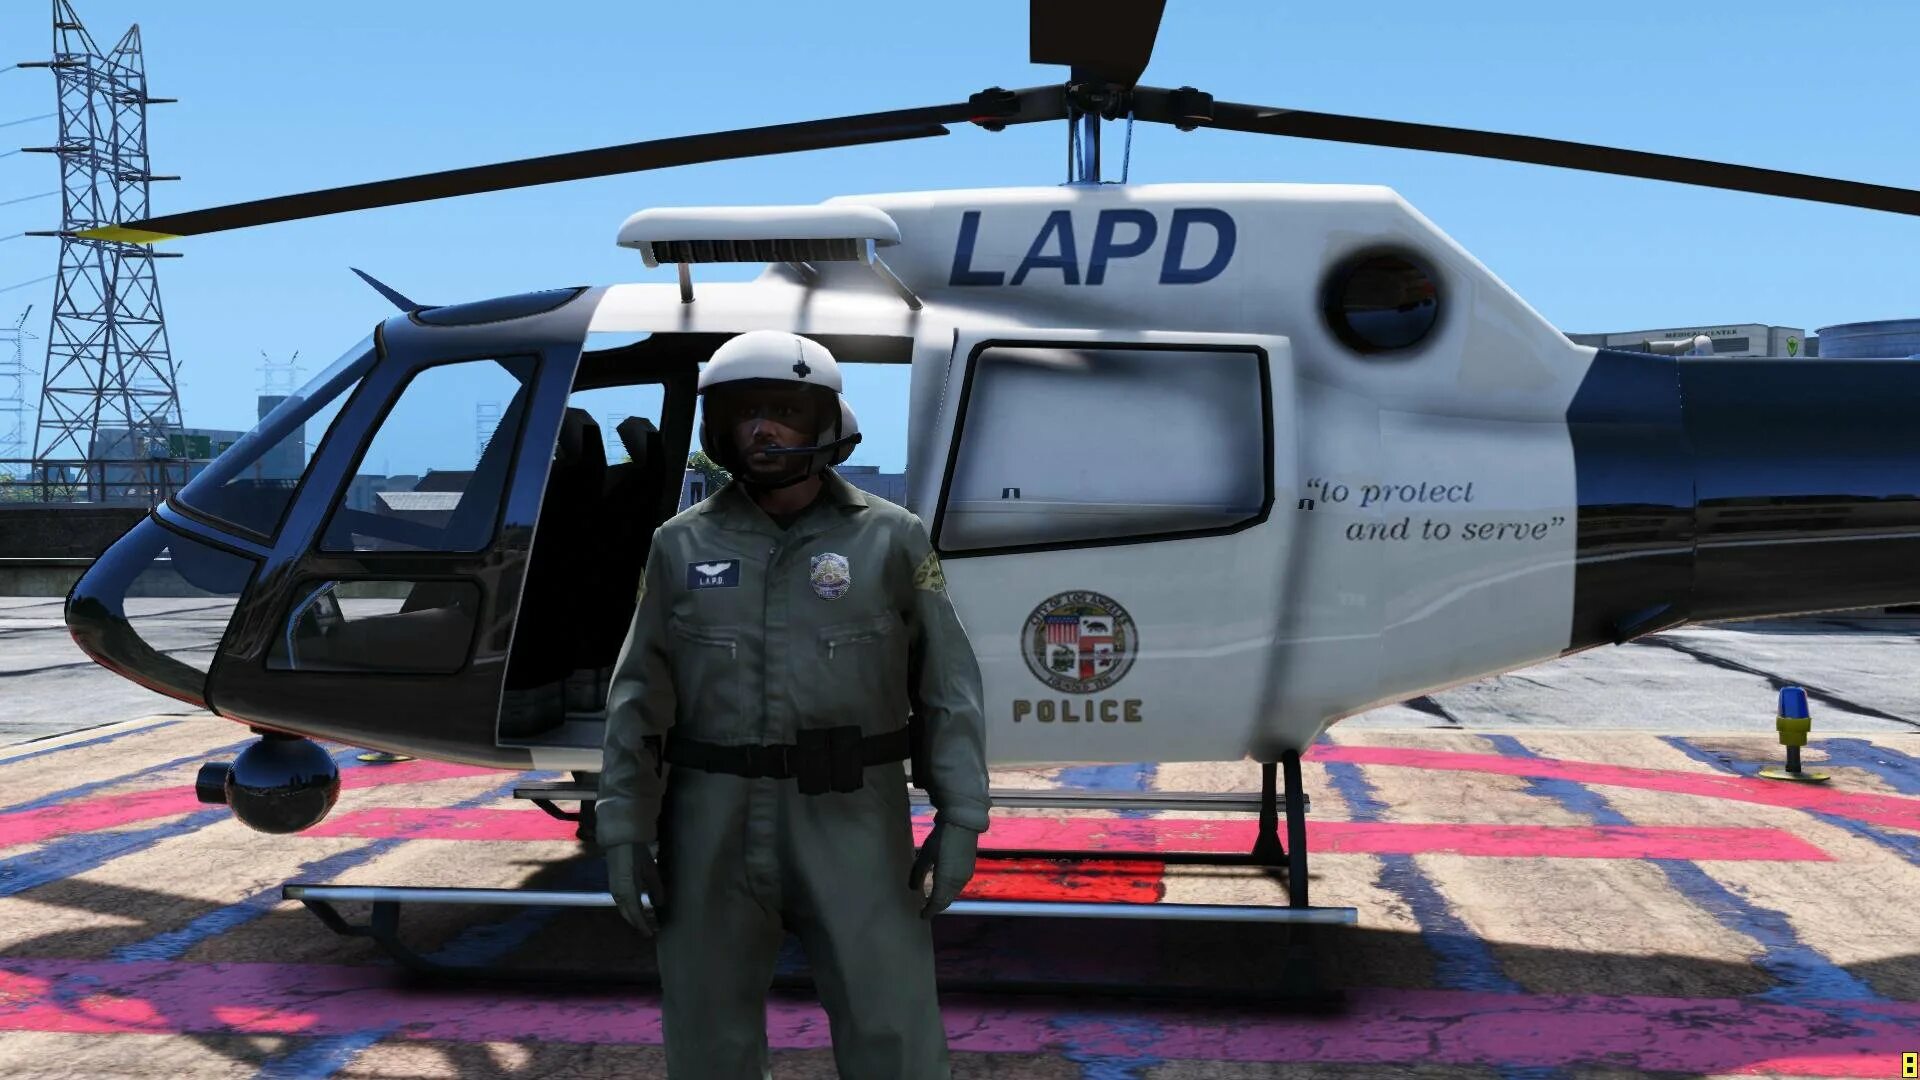 Air support. LAPD Air support. Air support Unit LAPD. LAPD Air support Division. LAPD Air support Division logo.